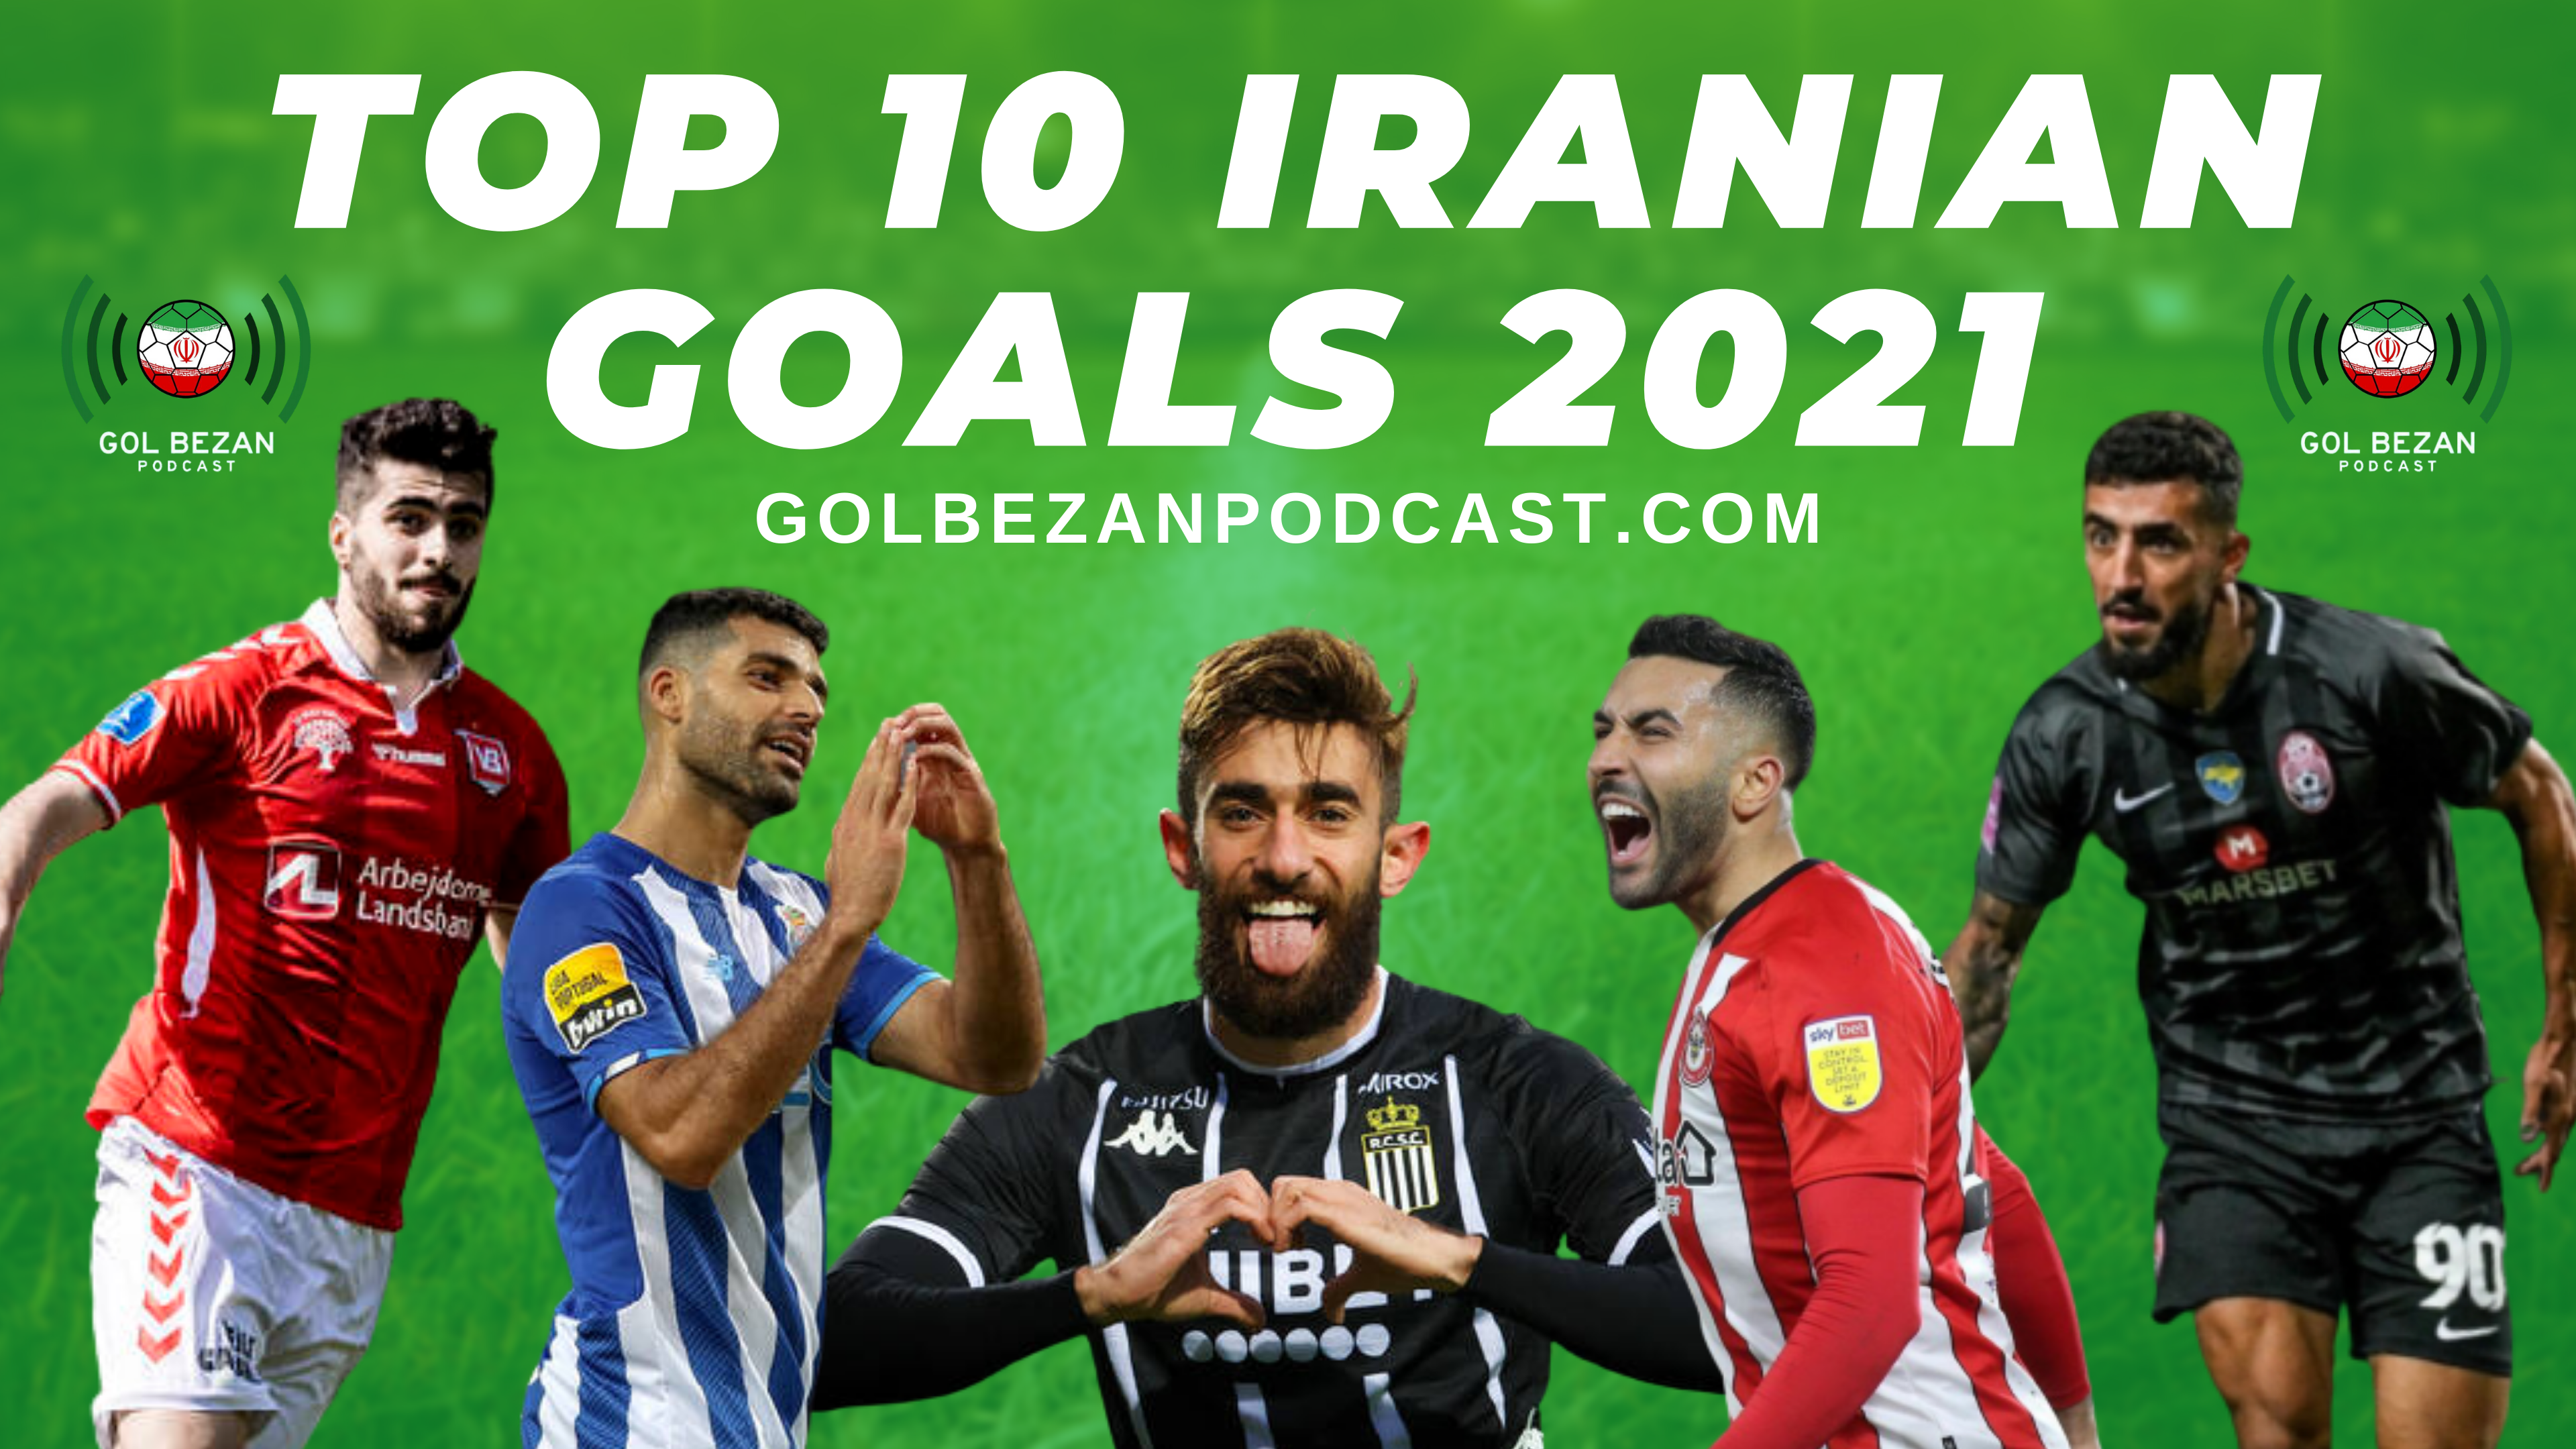 TOP 10 IRANIAN GOALS 2021 | ft. Mehdi Taremi, Saman Ghoddos, Allahyar Sayyadmanesh, Saeid Ezatolahi